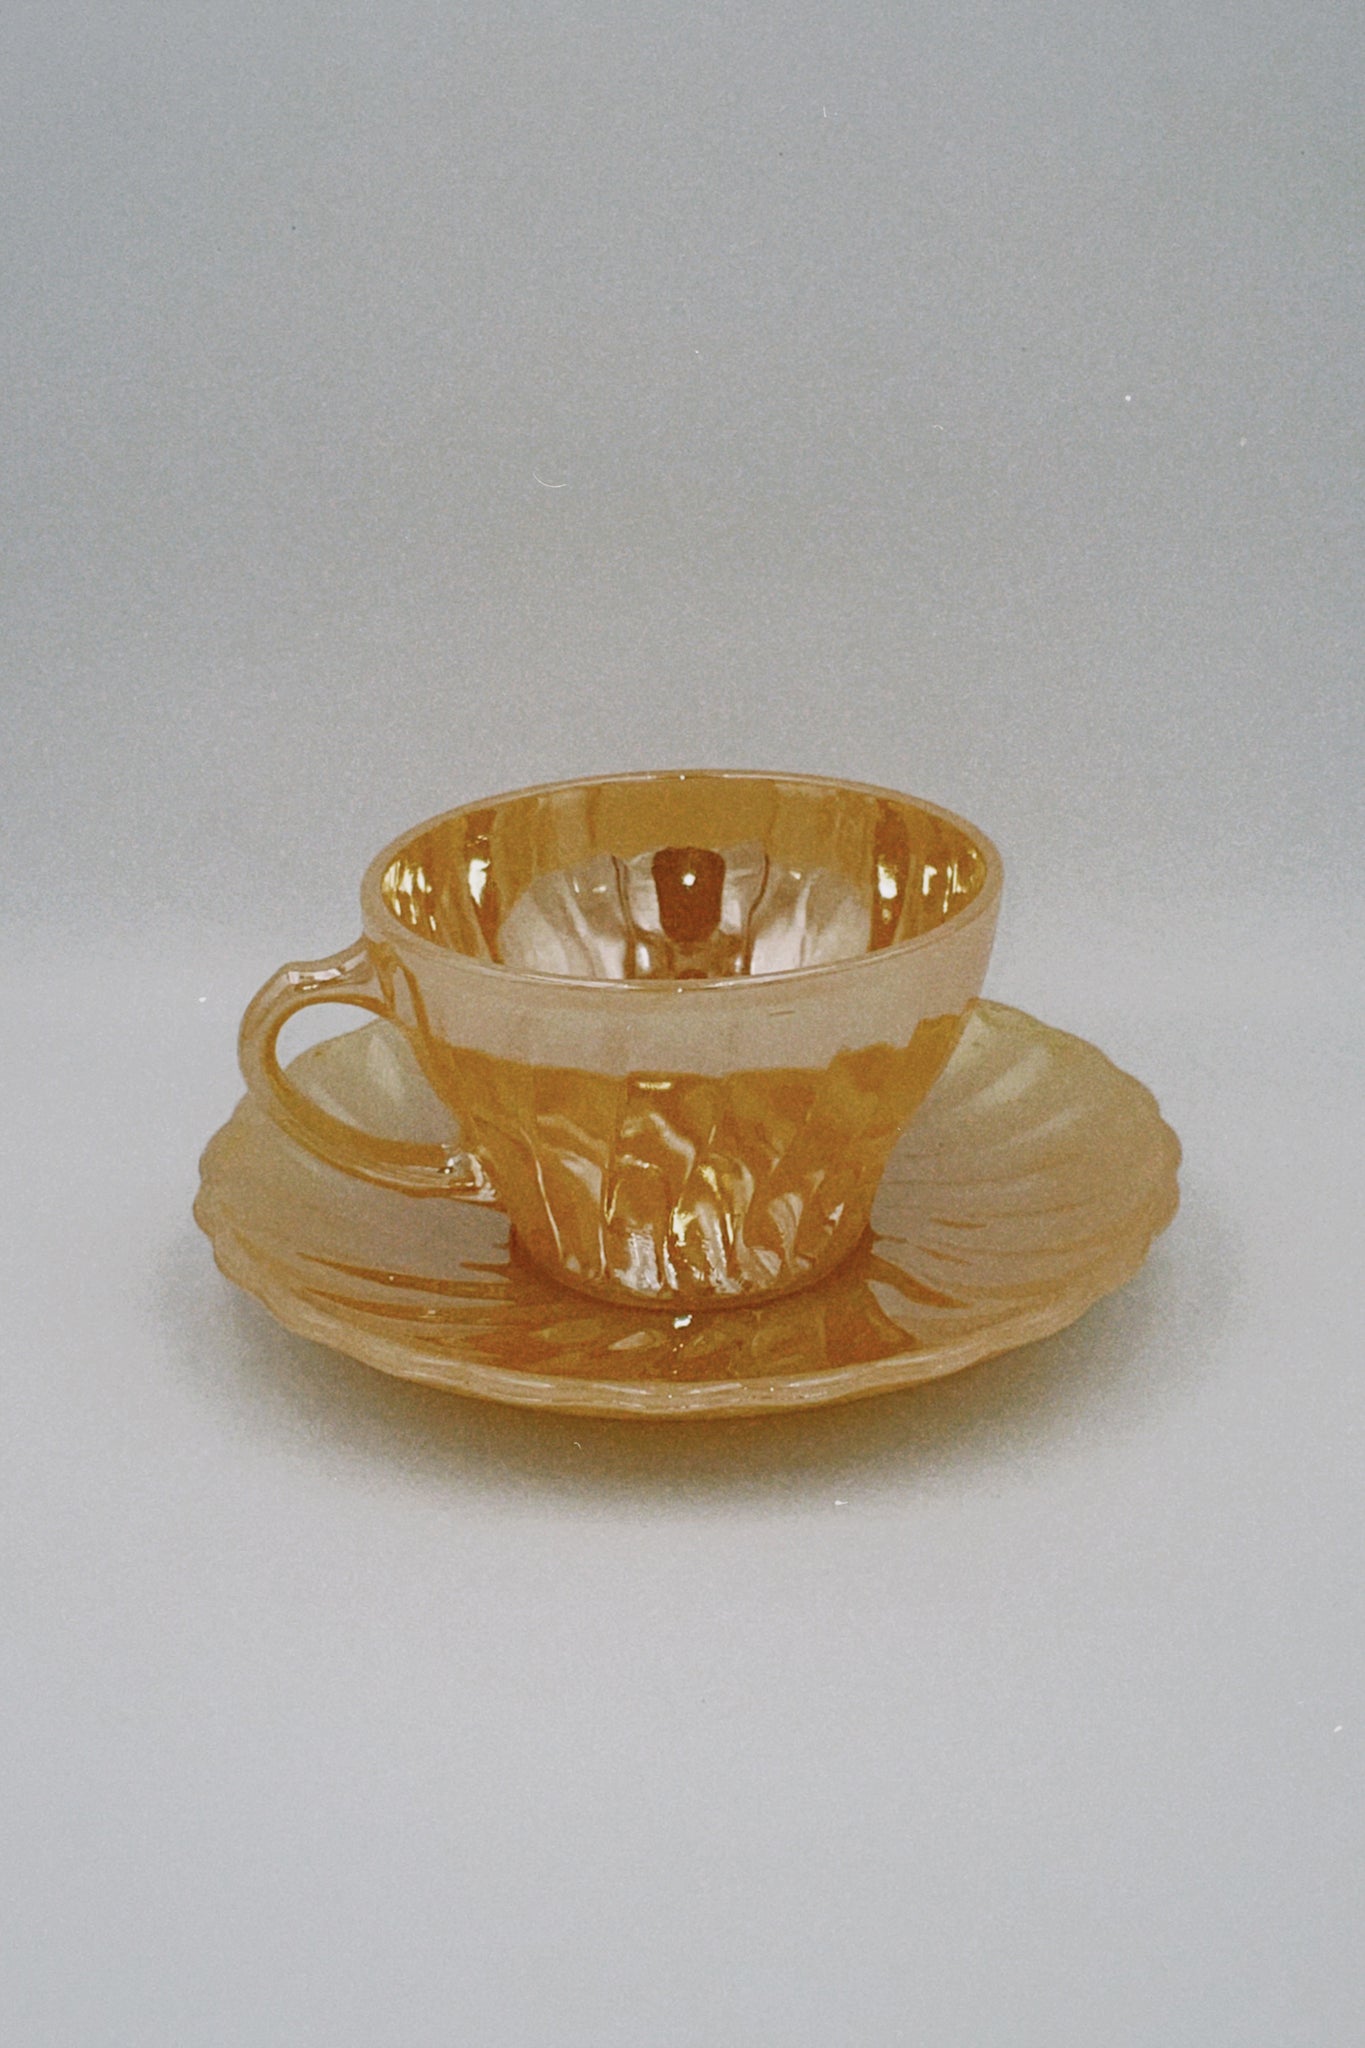 Iridescent Milkglass Orange Tea Set